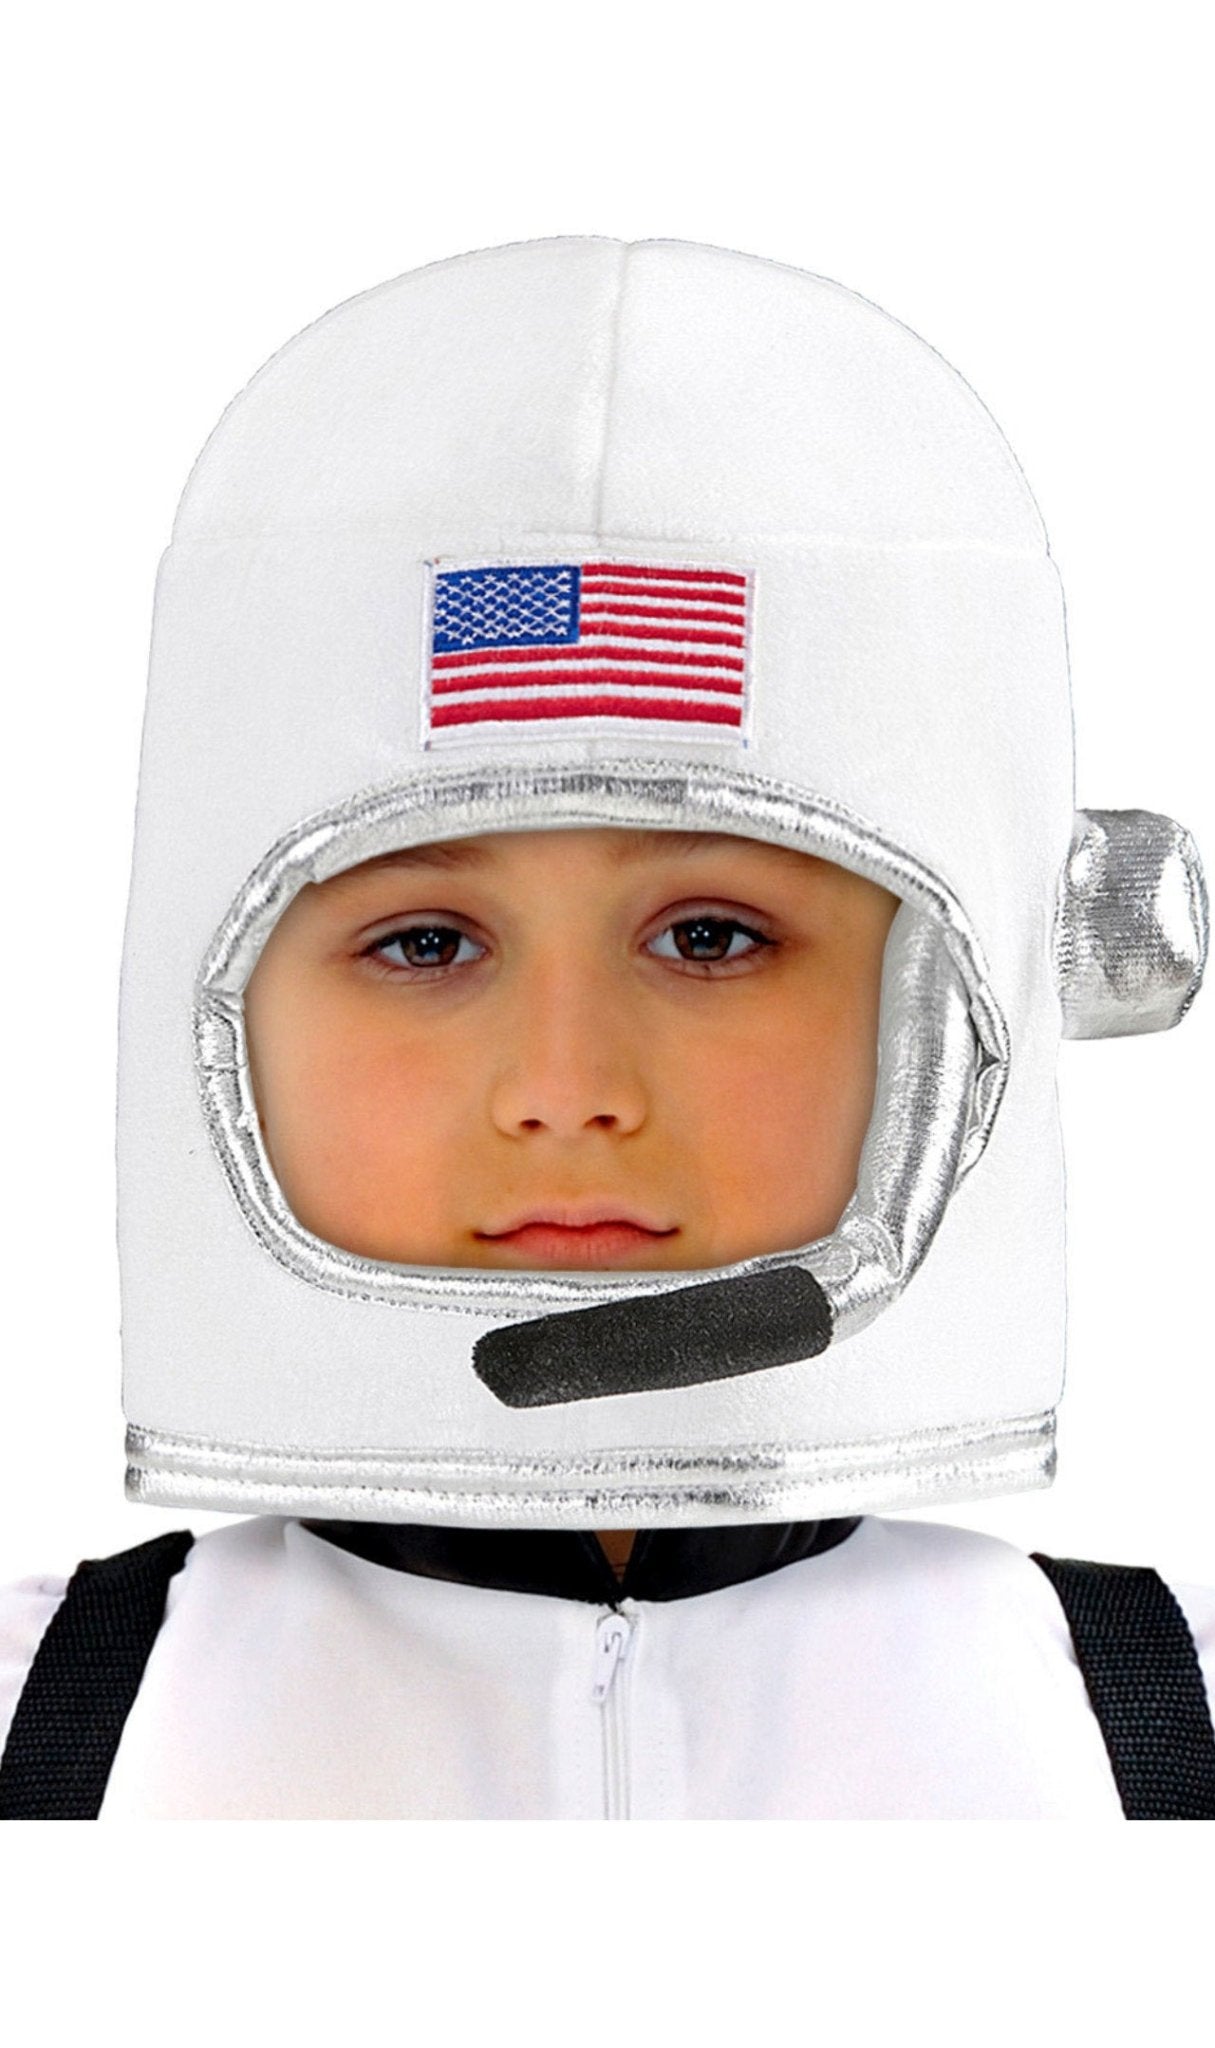 Casque Astronaute Espace enfant